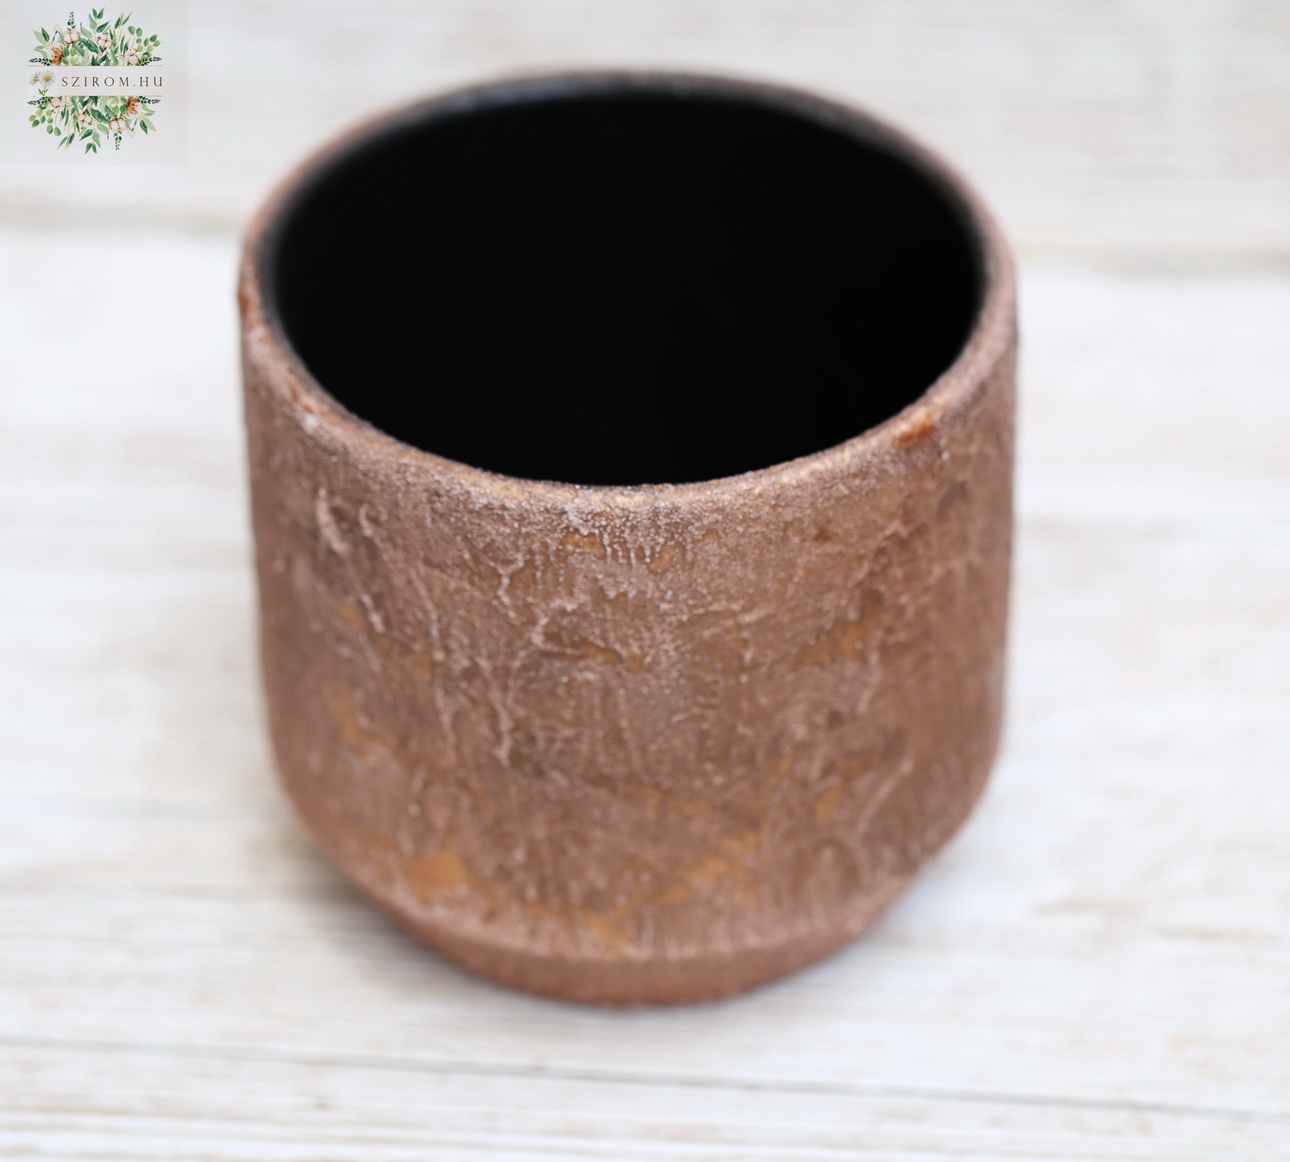 flower delivery Budapest - Ceramic bowl, bronze, 14 cm